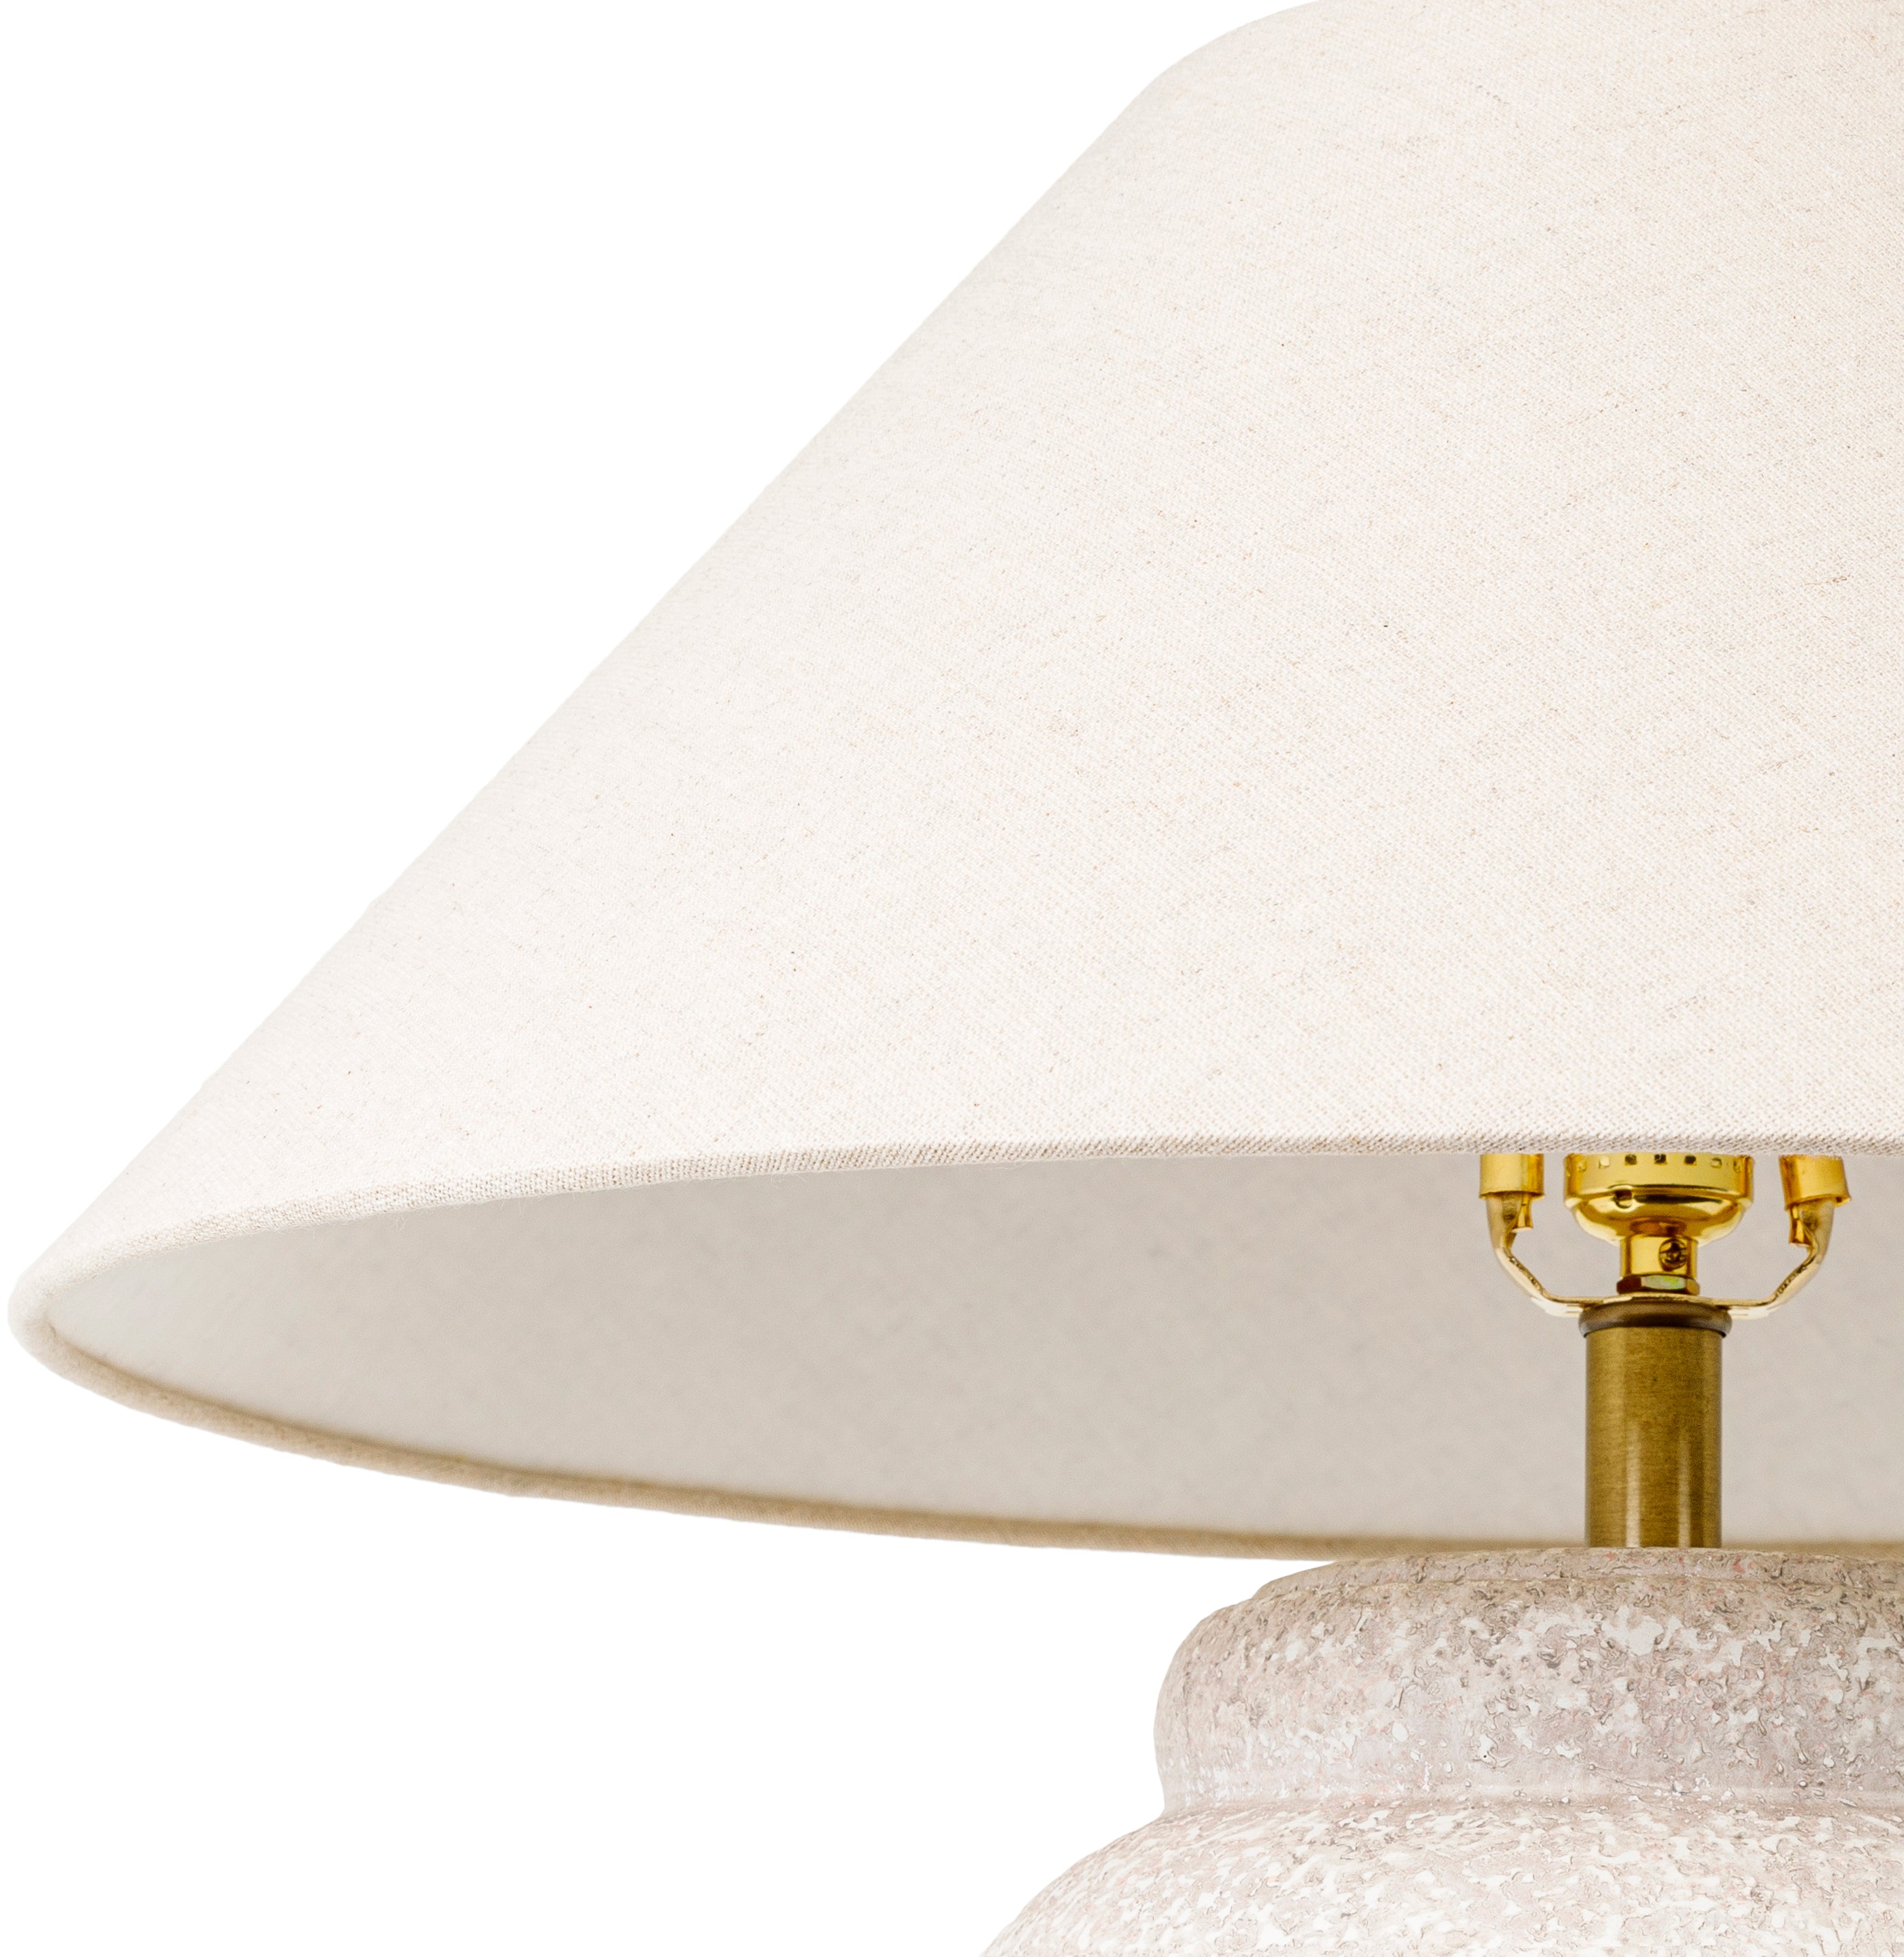 Capelli Table Lamp